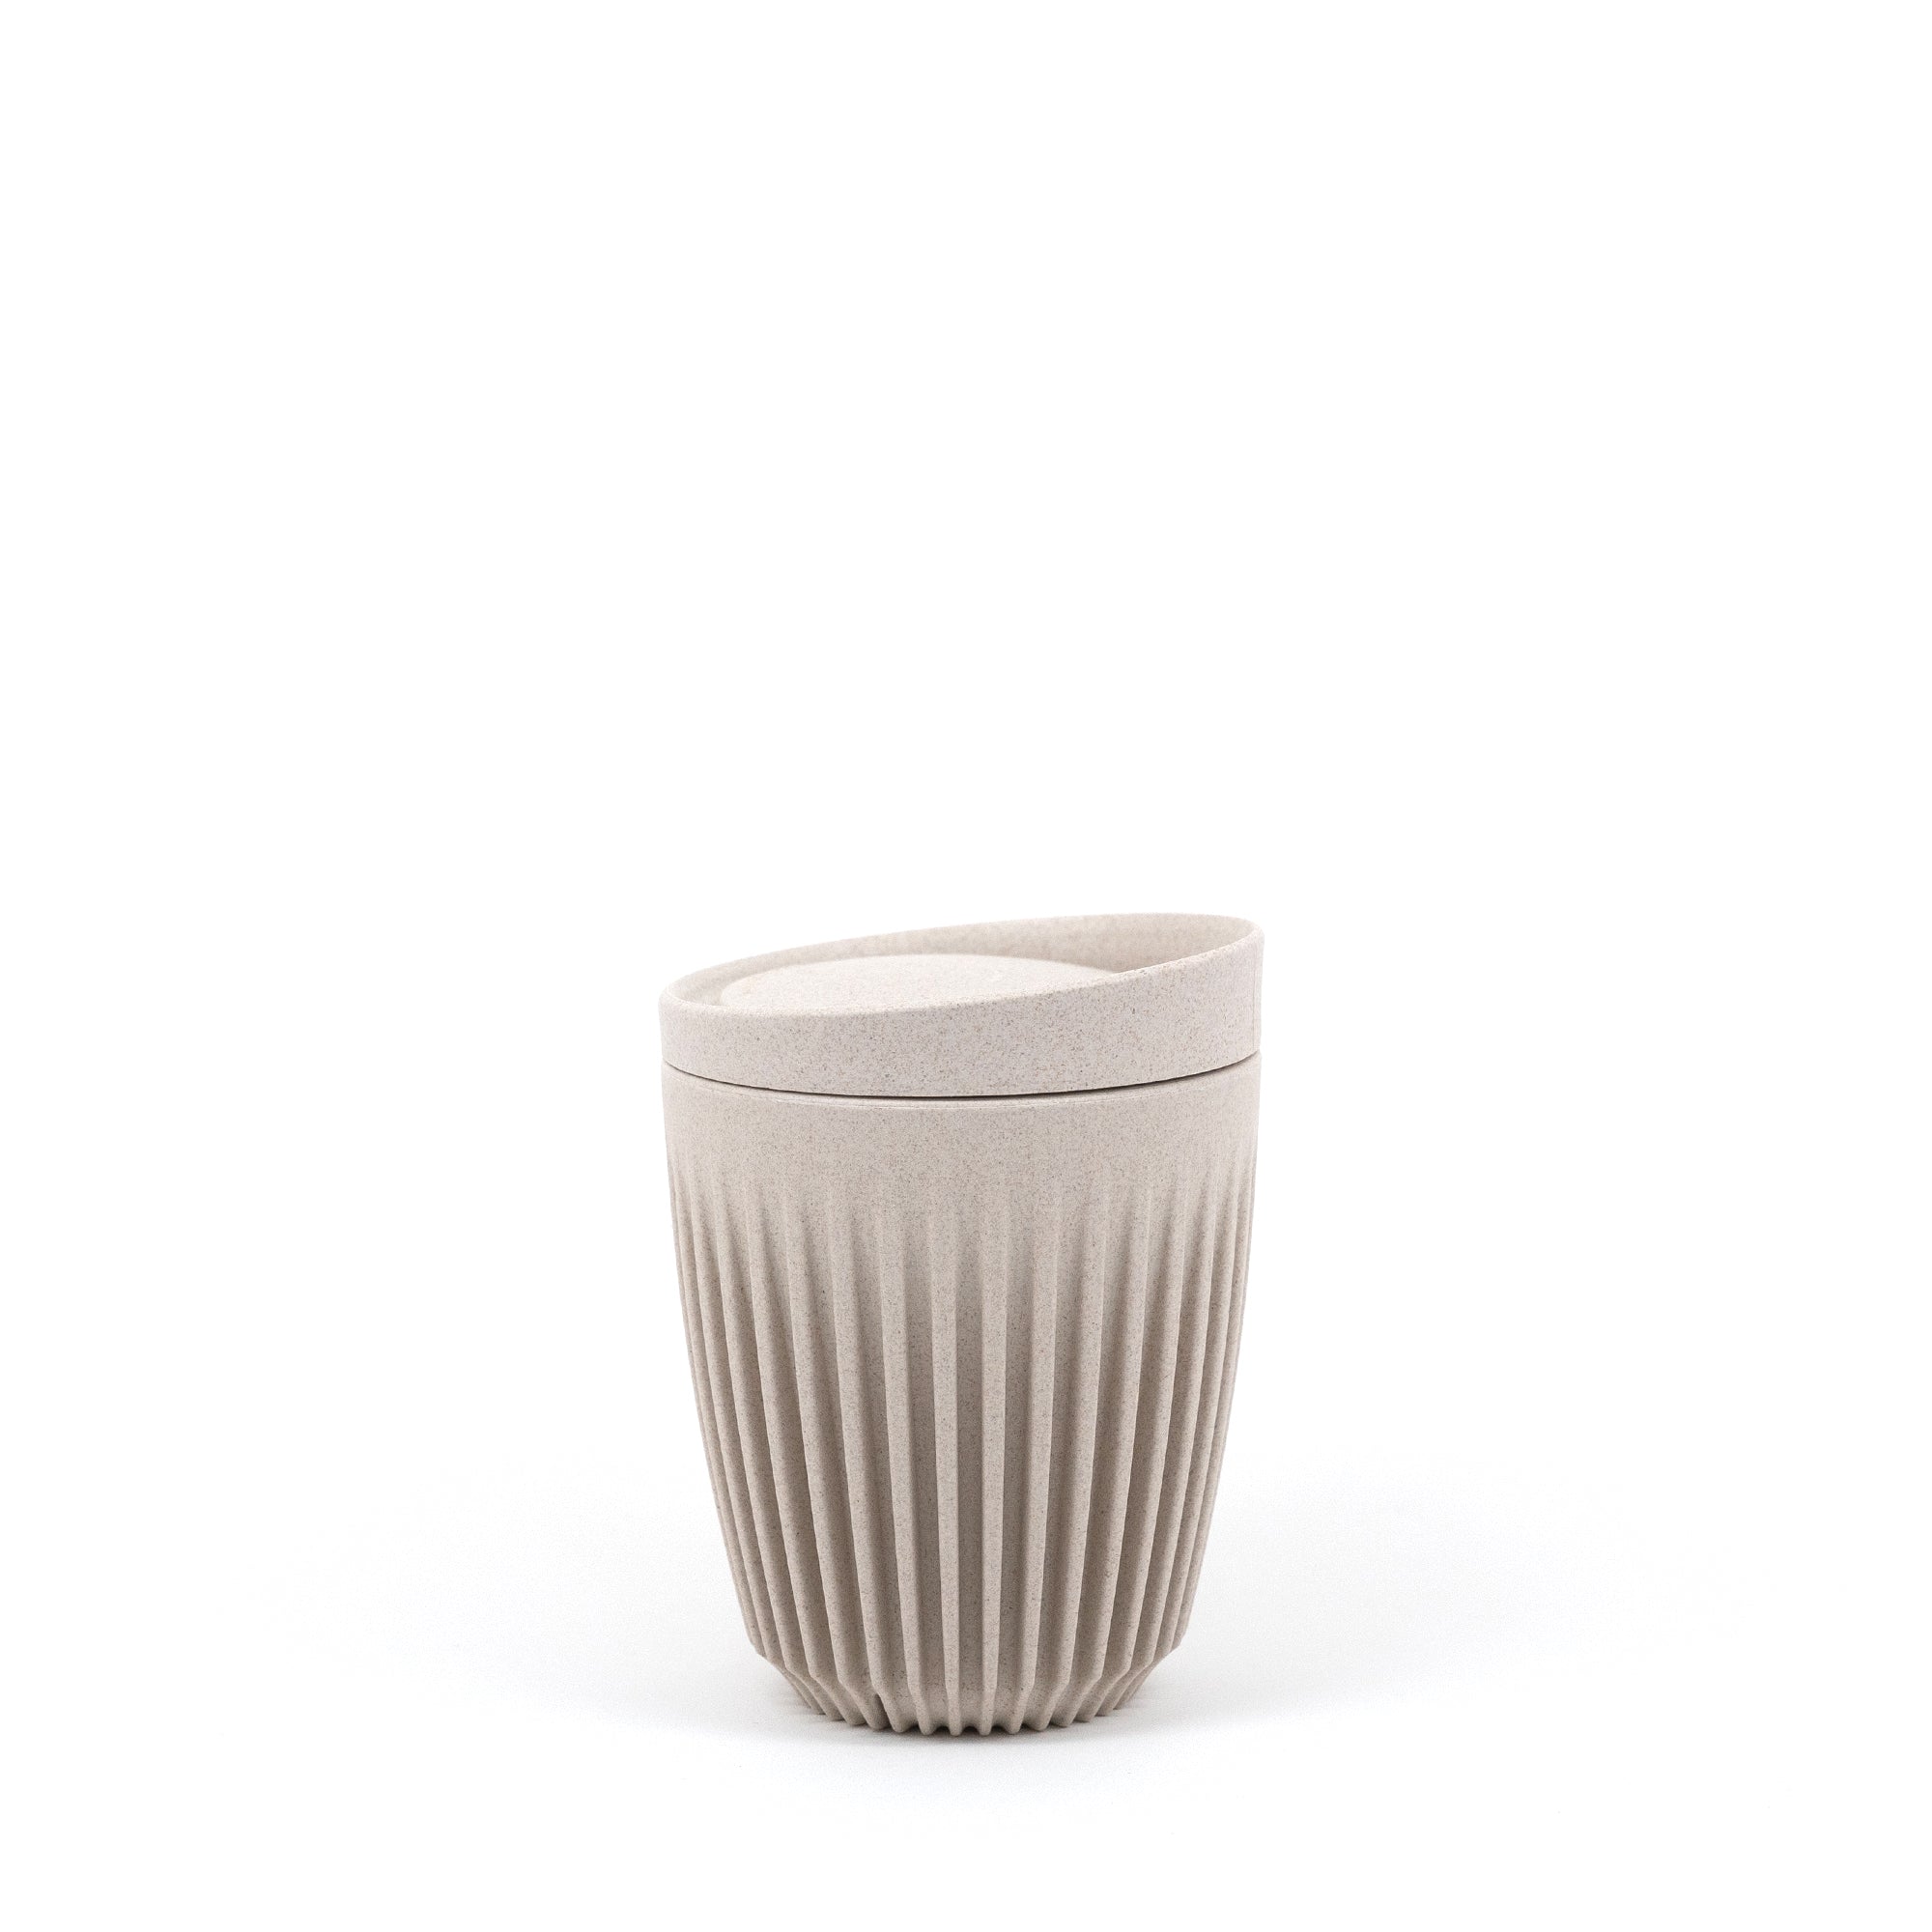 Electric Heated Coffee Mug Cup Red – Ellie Flowers